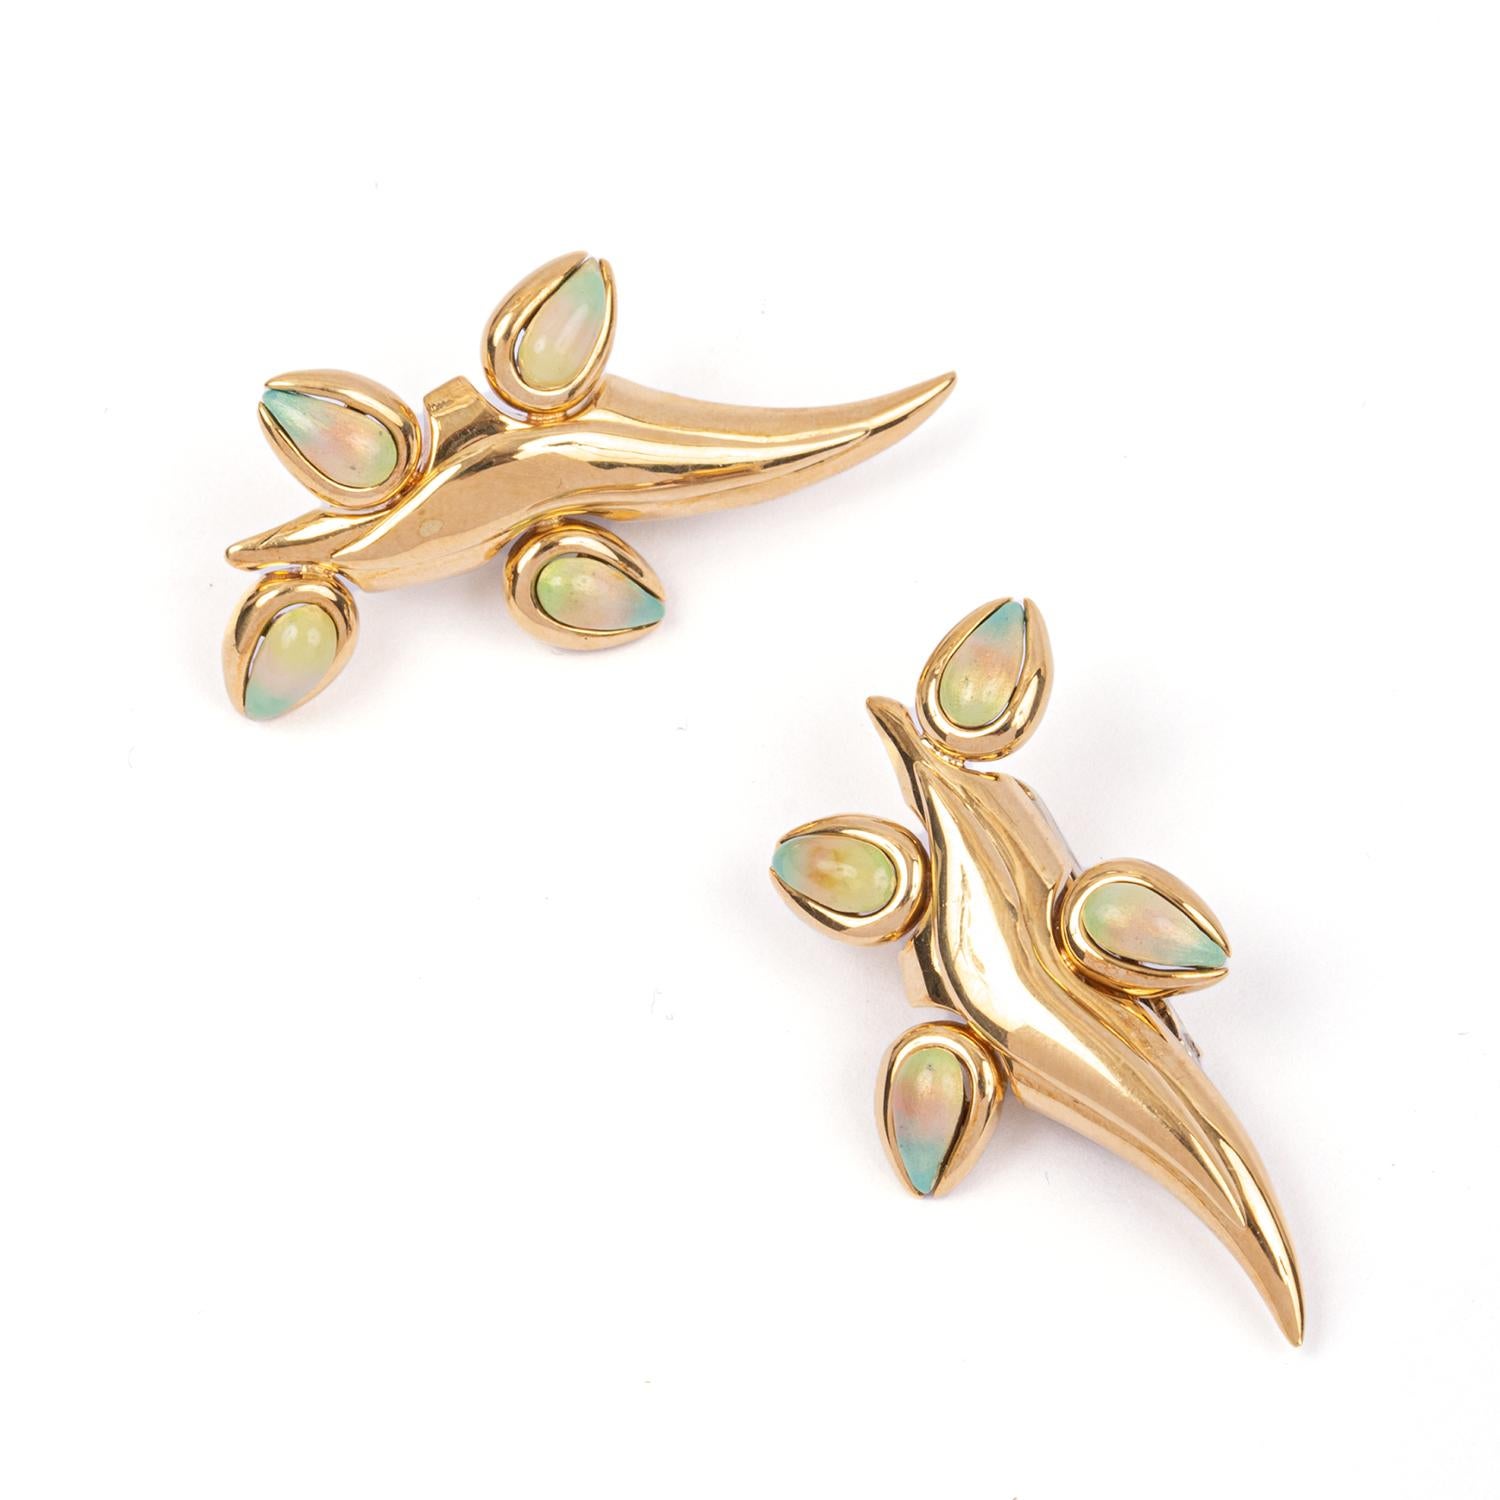 Beautiful earrings by Giancarlo Montebello for Enrico Trizio. A yellow gold 